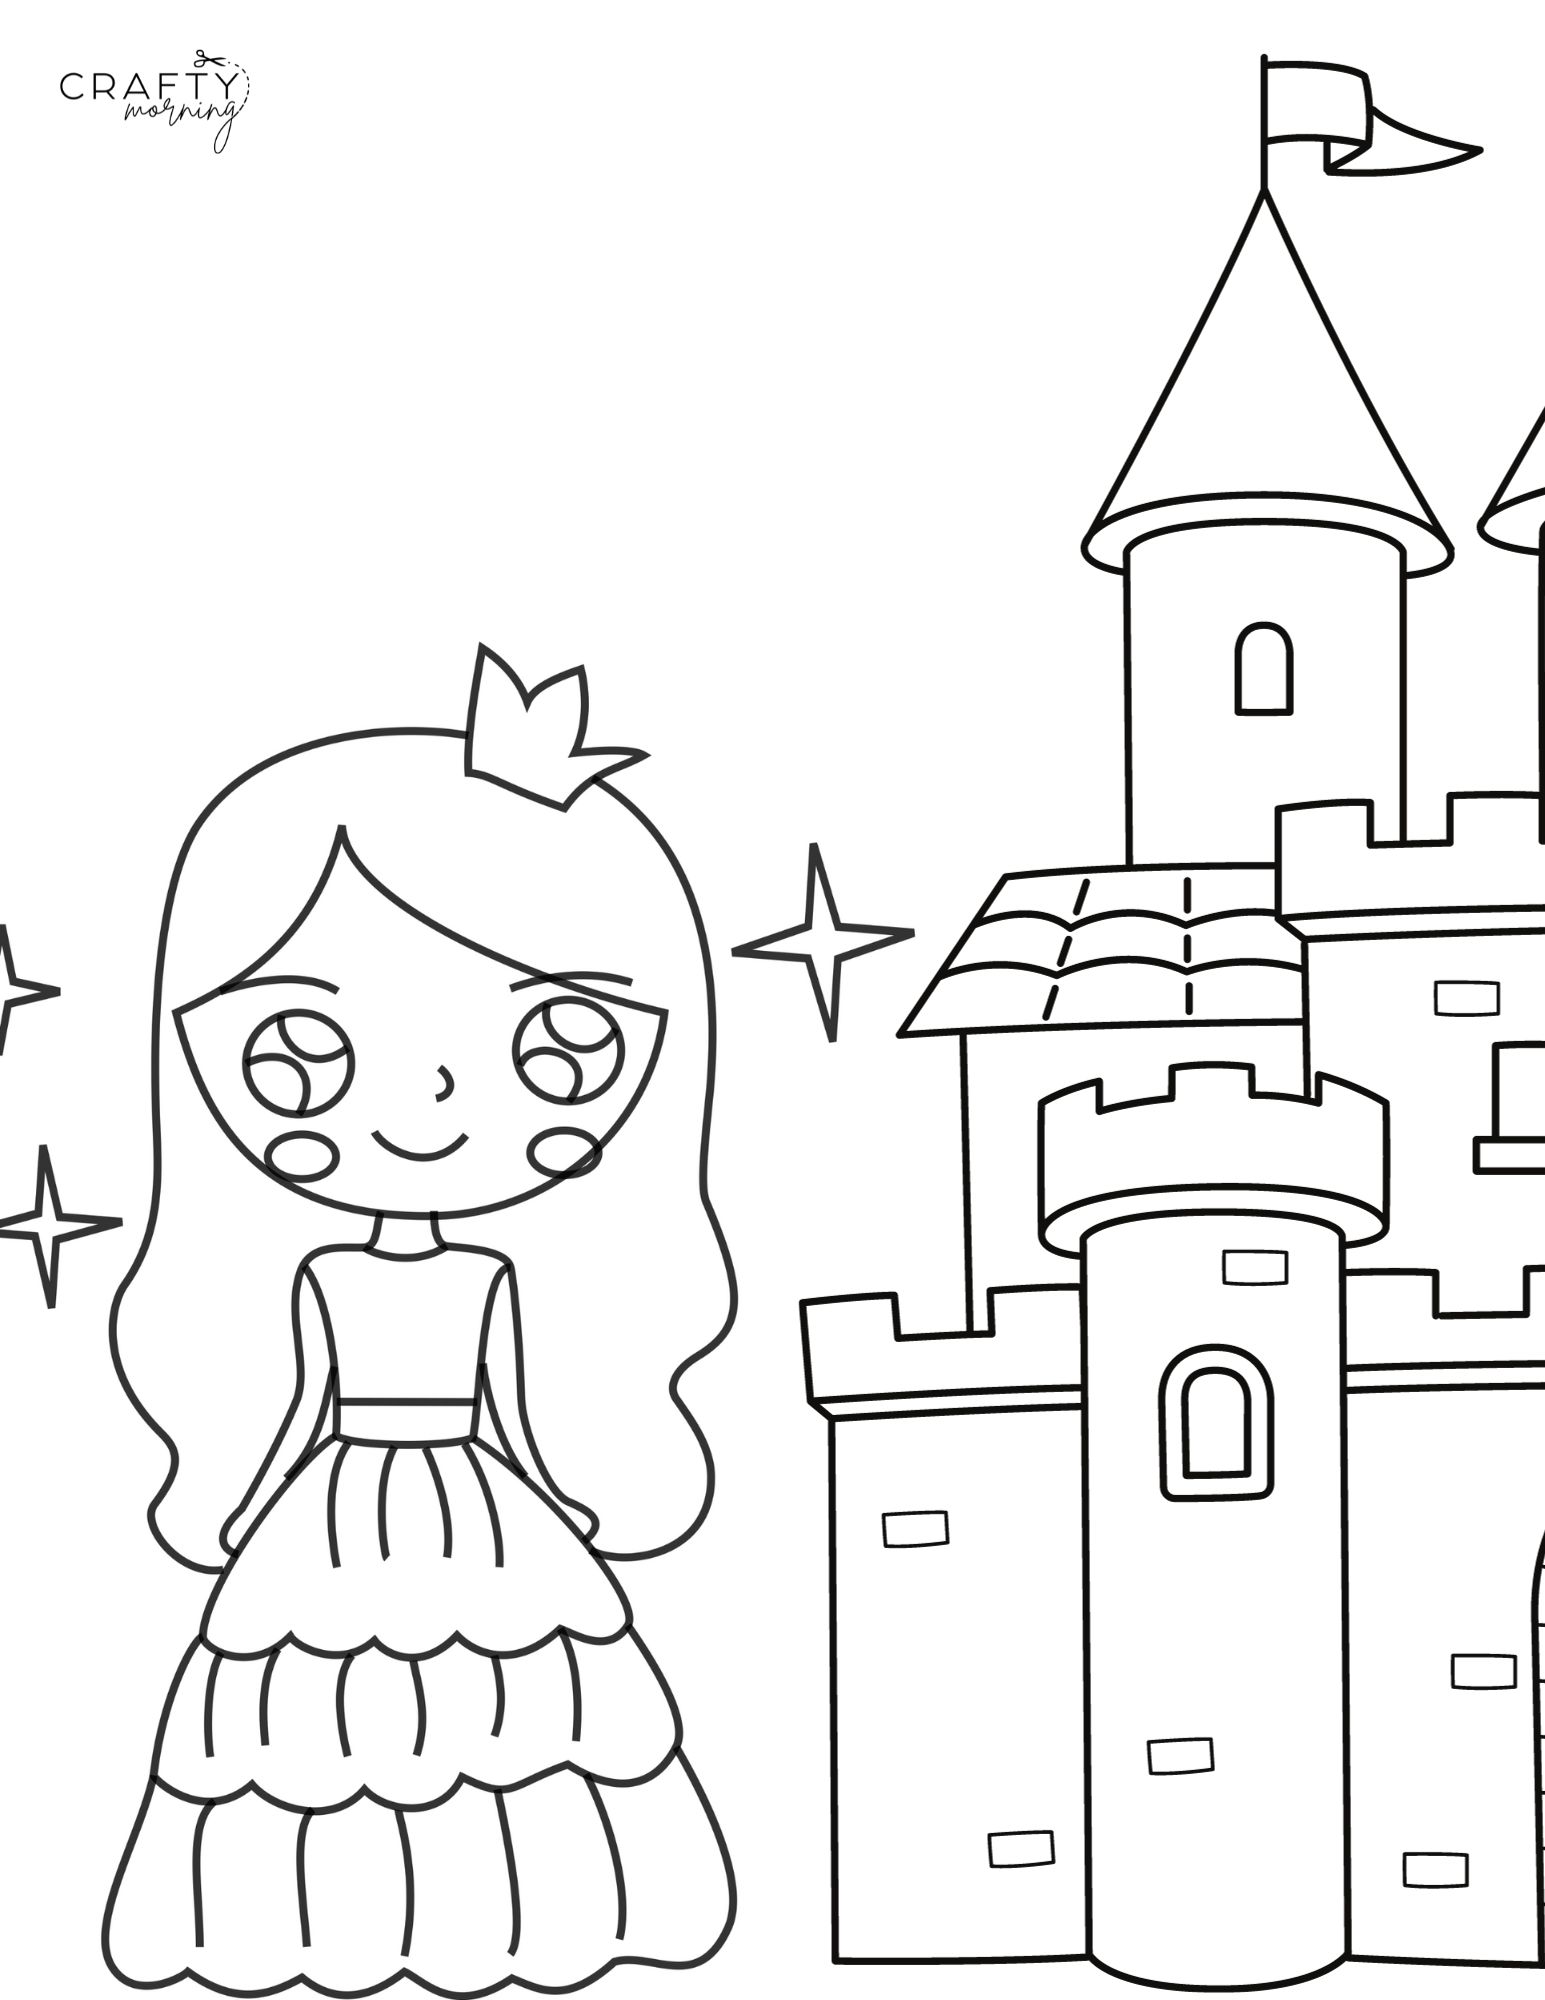 Princess drawing step by step tutorial